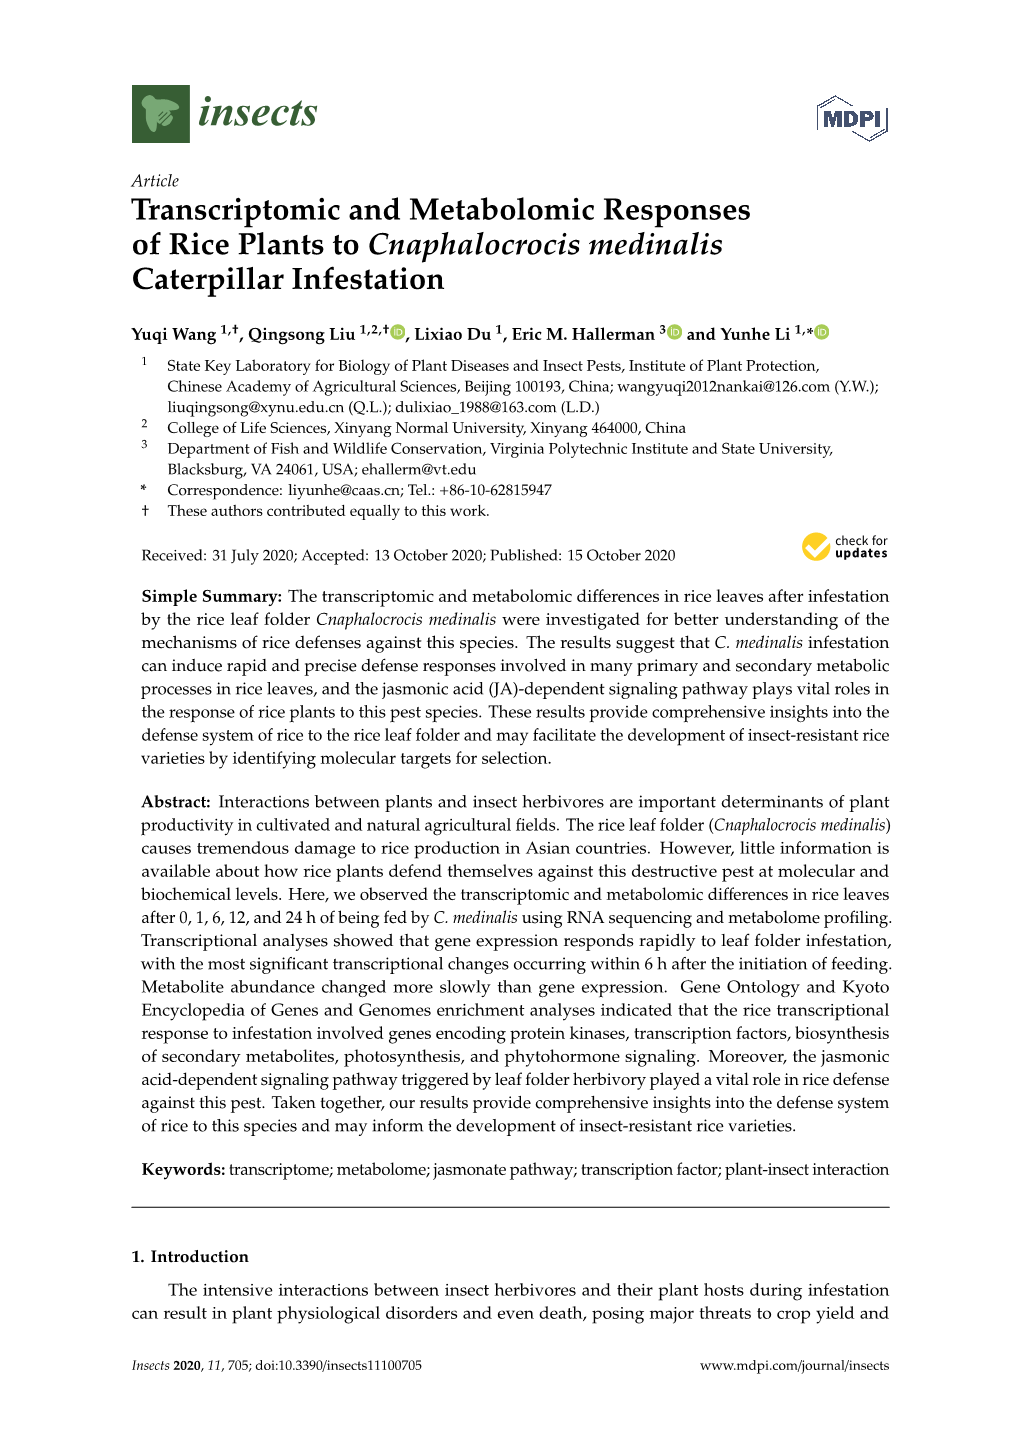 Transcriptomic and Metabolomic Responses of Rice Plants to Cnaphalocrocis Medinalis Caterpillar Infestation